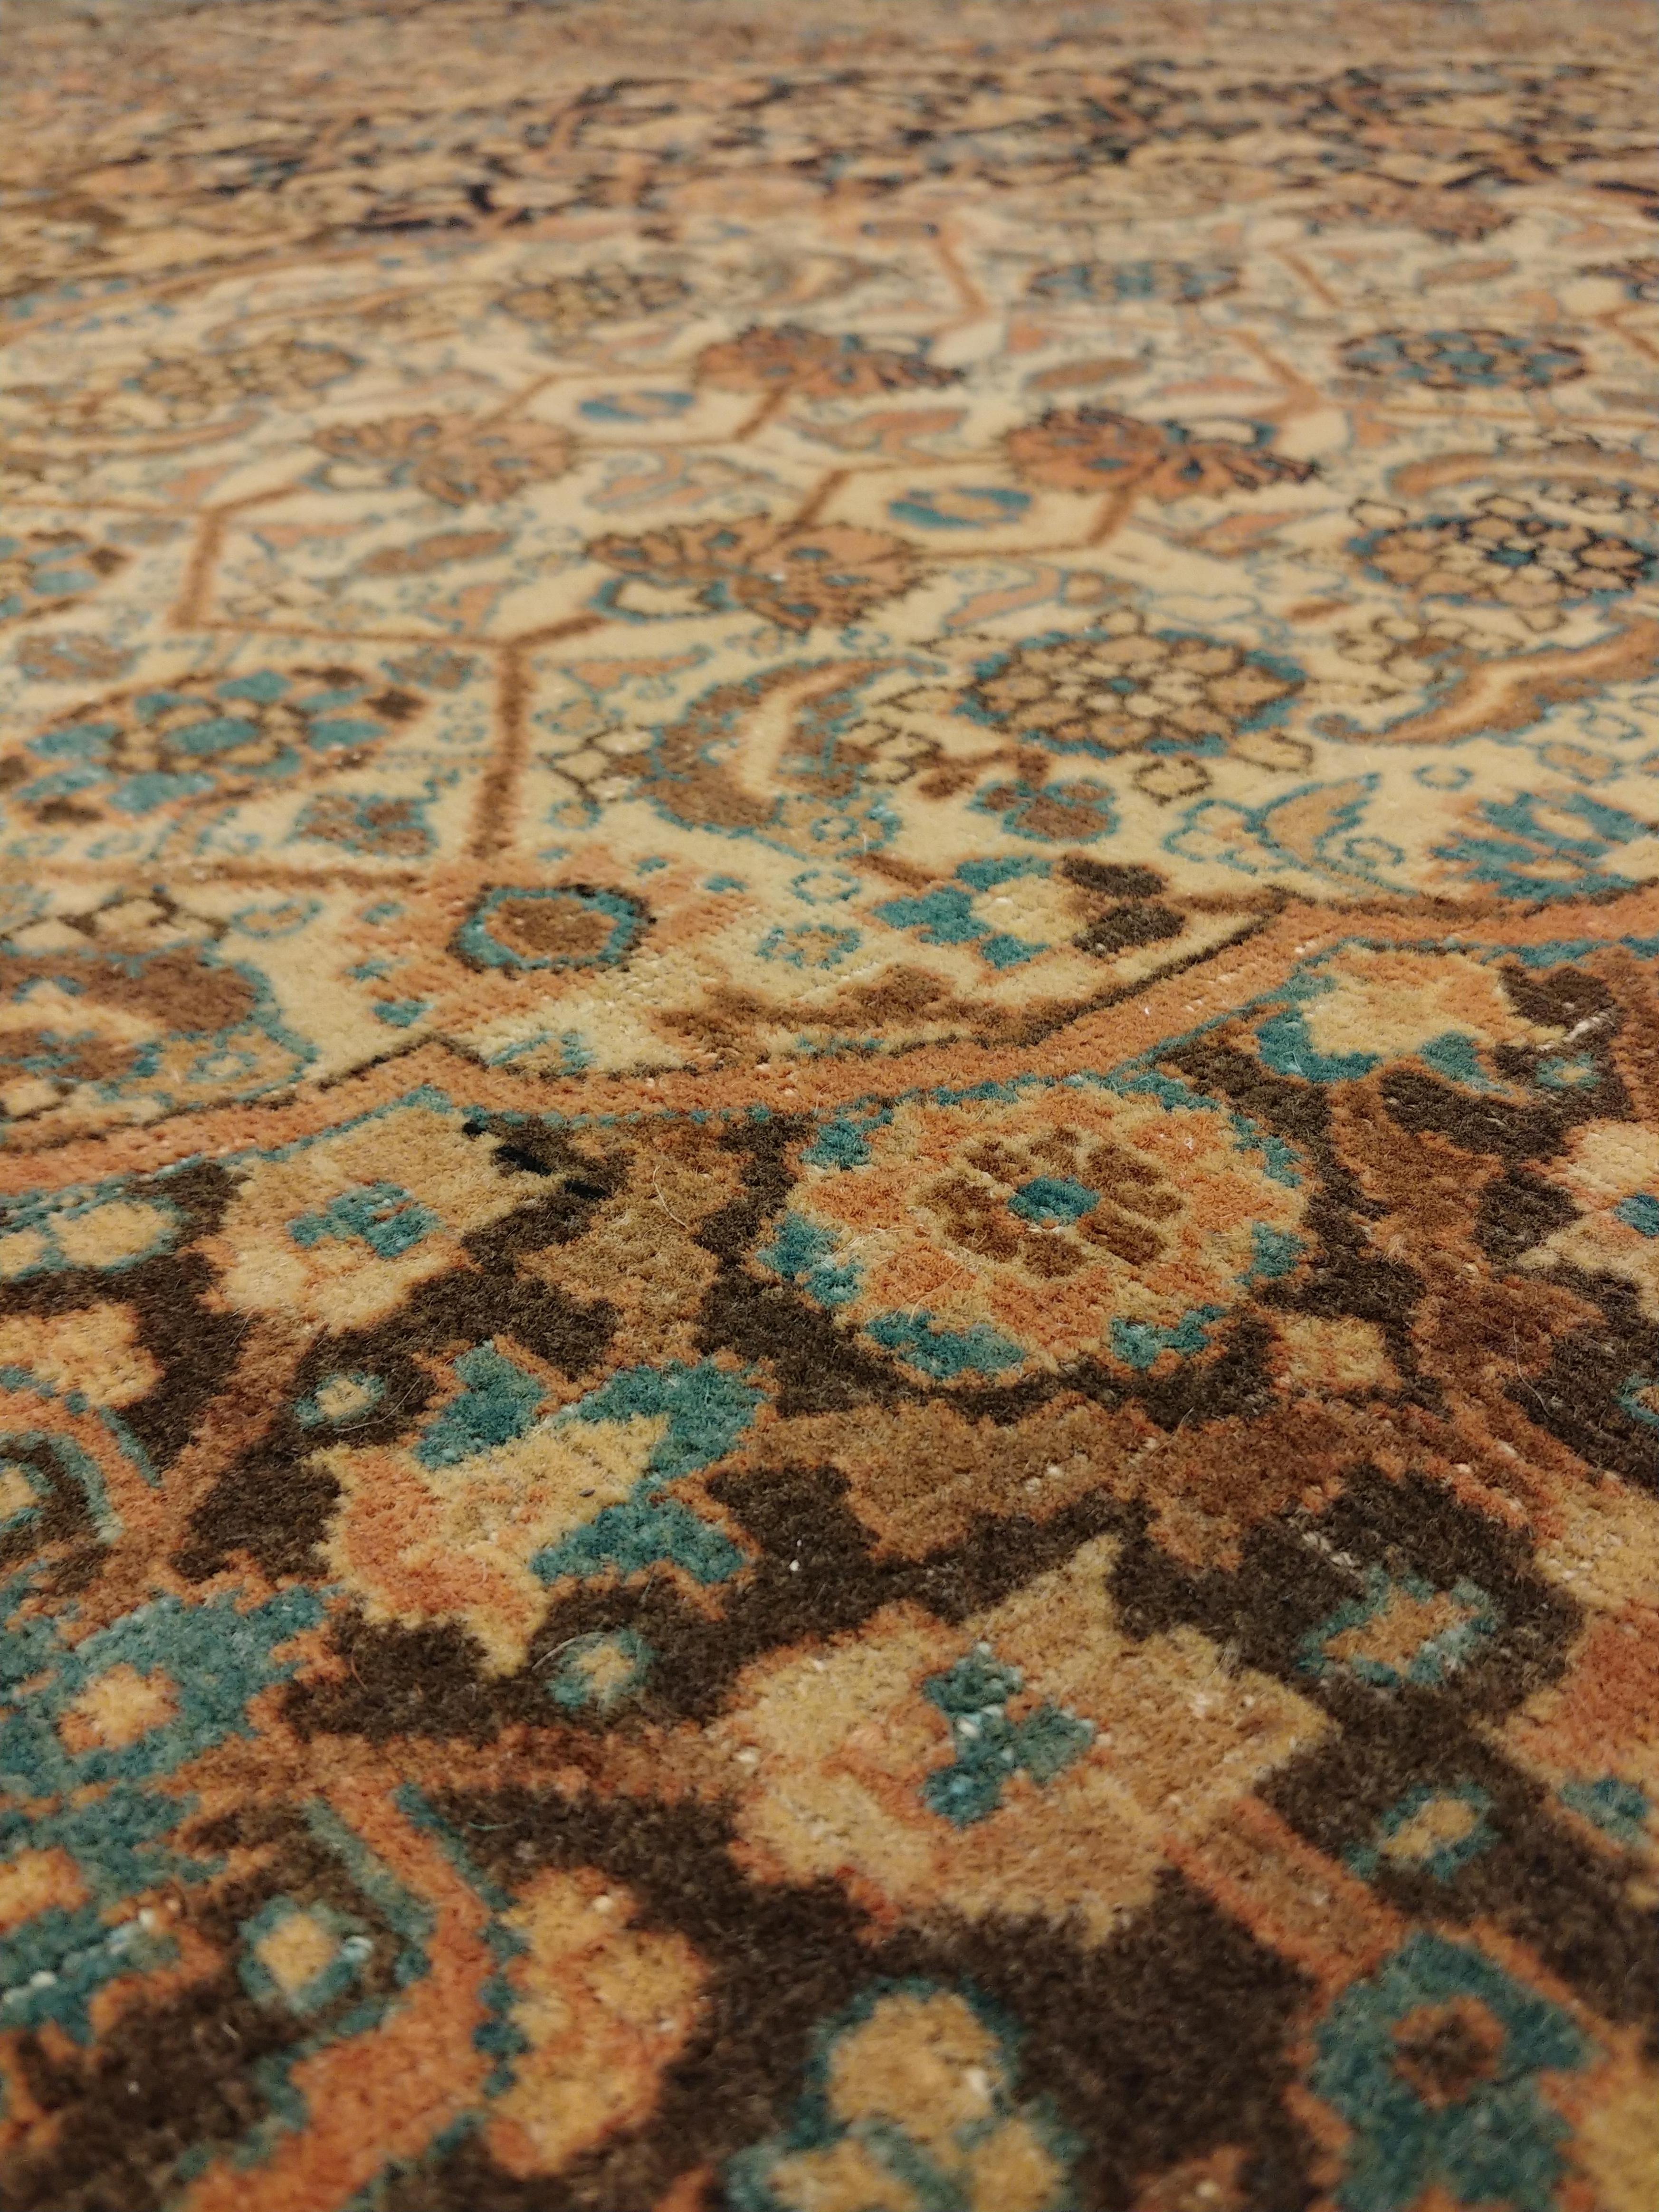 19th Century Antique Tabriz Carpet, Hadji Jalili Persian Rug, Earth Tones, Brown, Terracotta